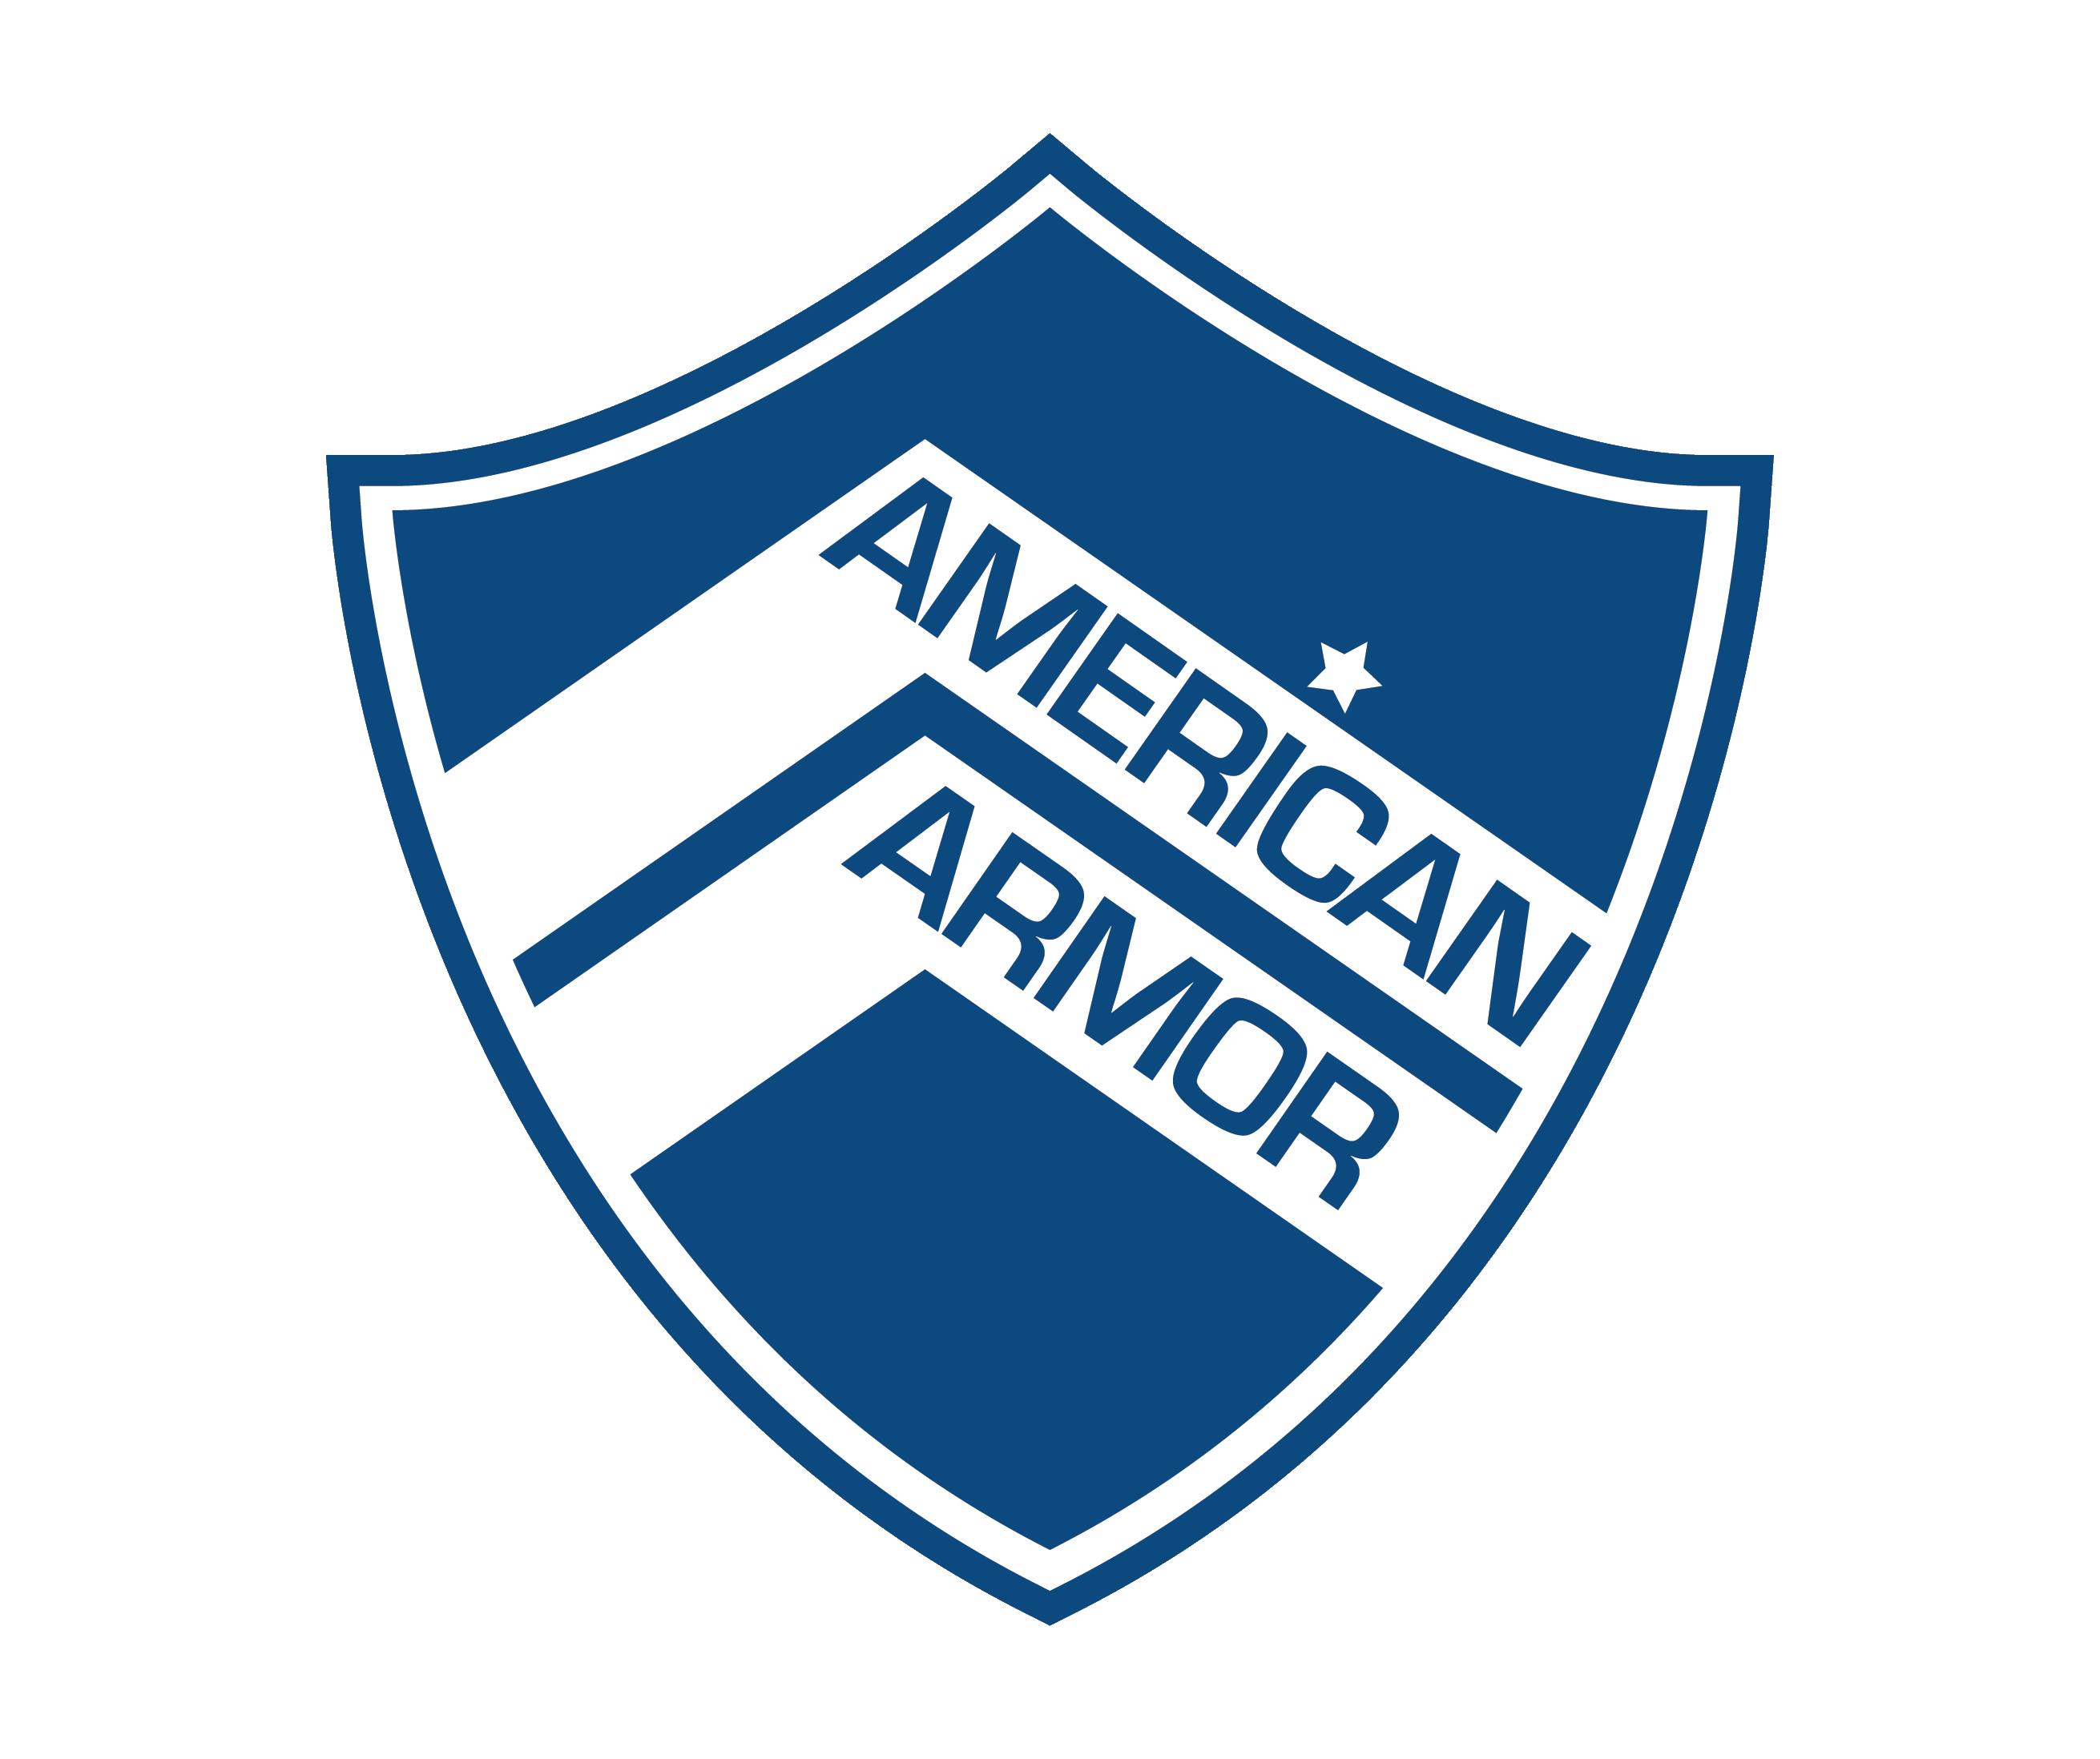 The American Armor Foundation logo